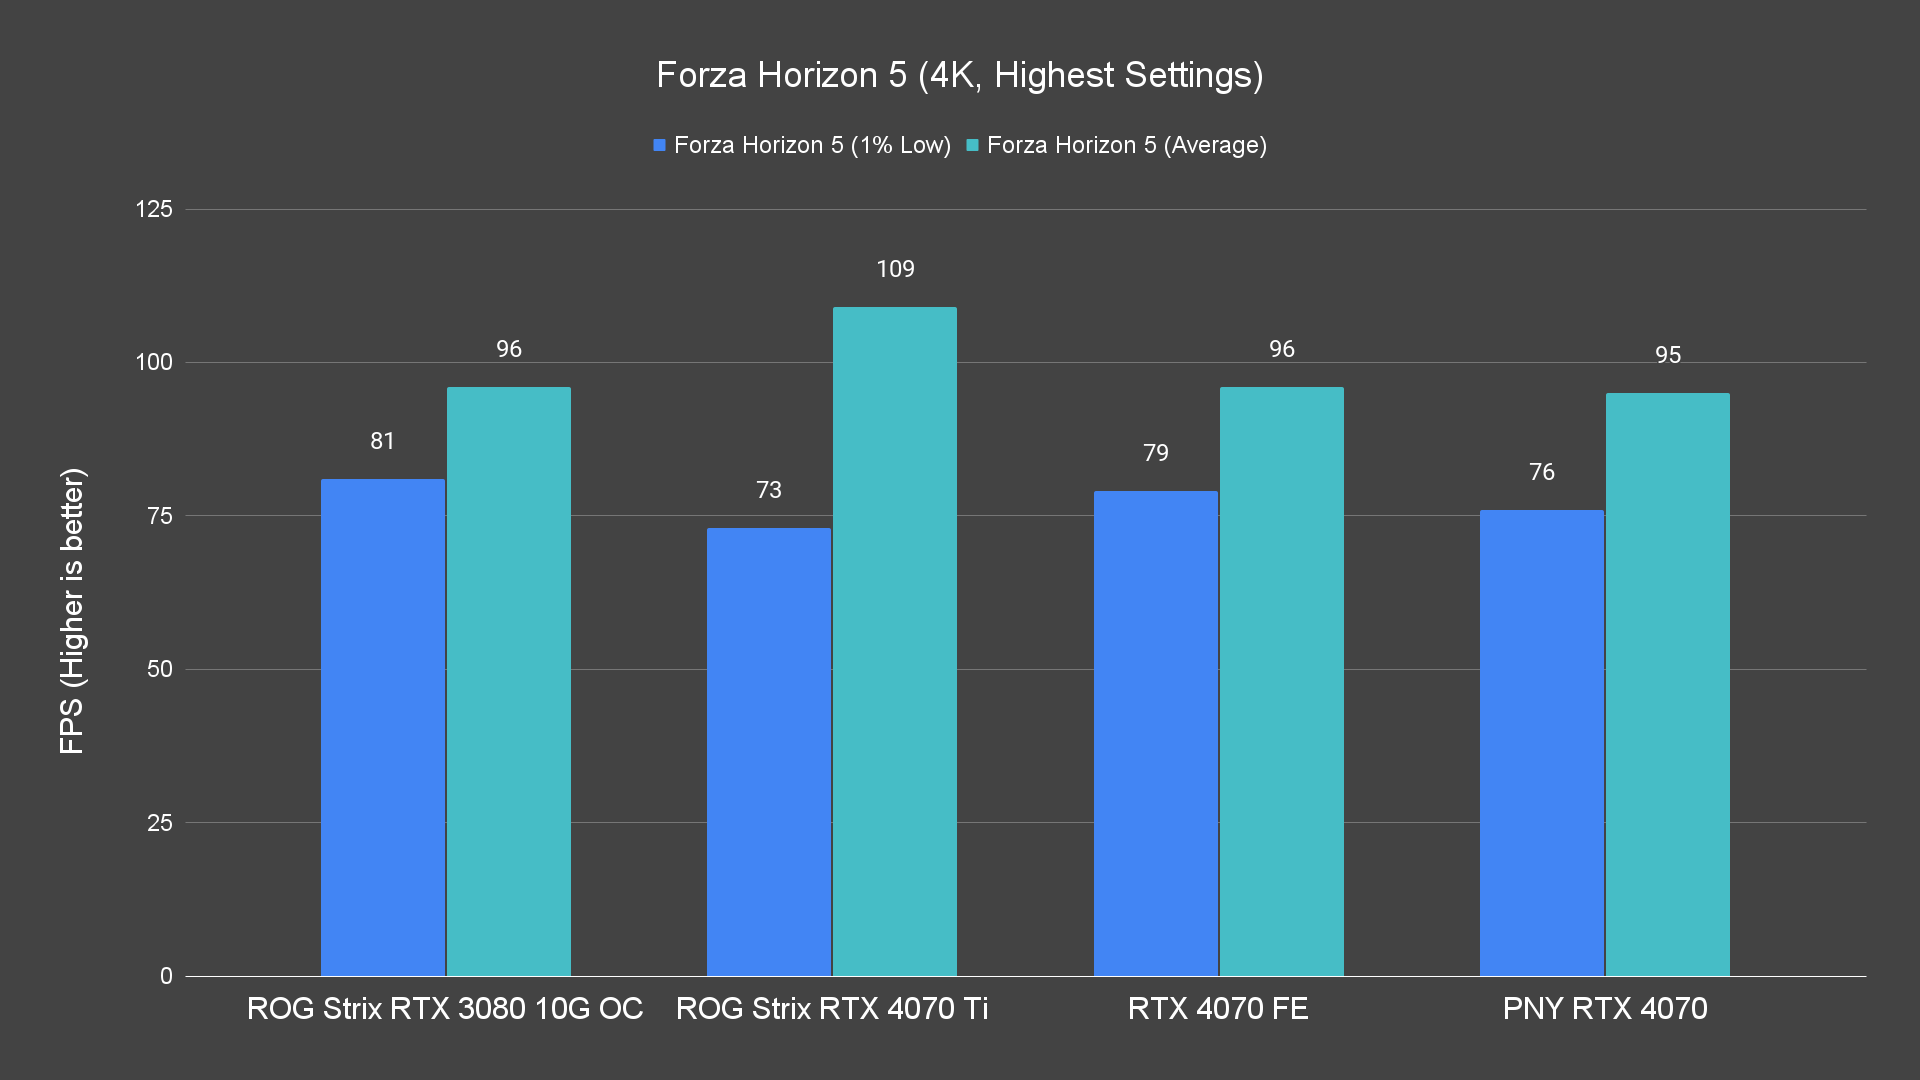 Forza Horizon 5 4K Highest Settings 4